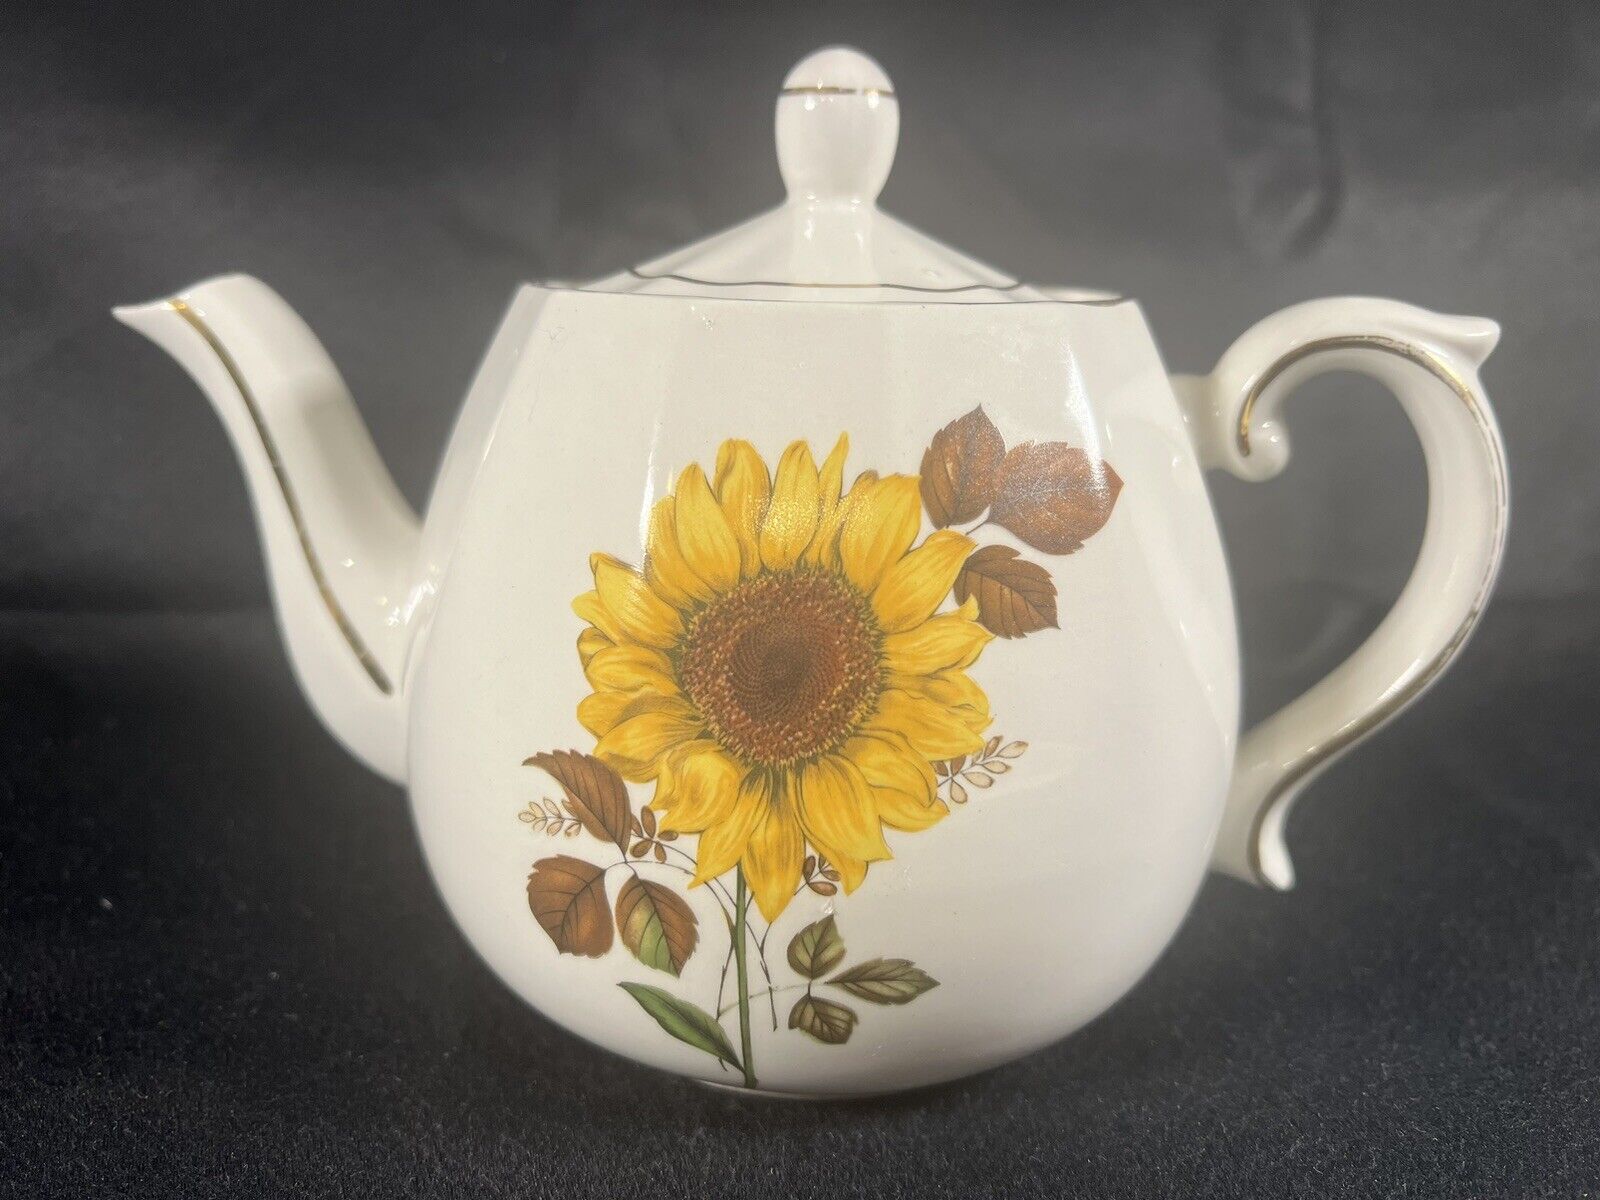 VIntage Ellgreave Wood & Sons Teapot Sunflowers Gold Trim England